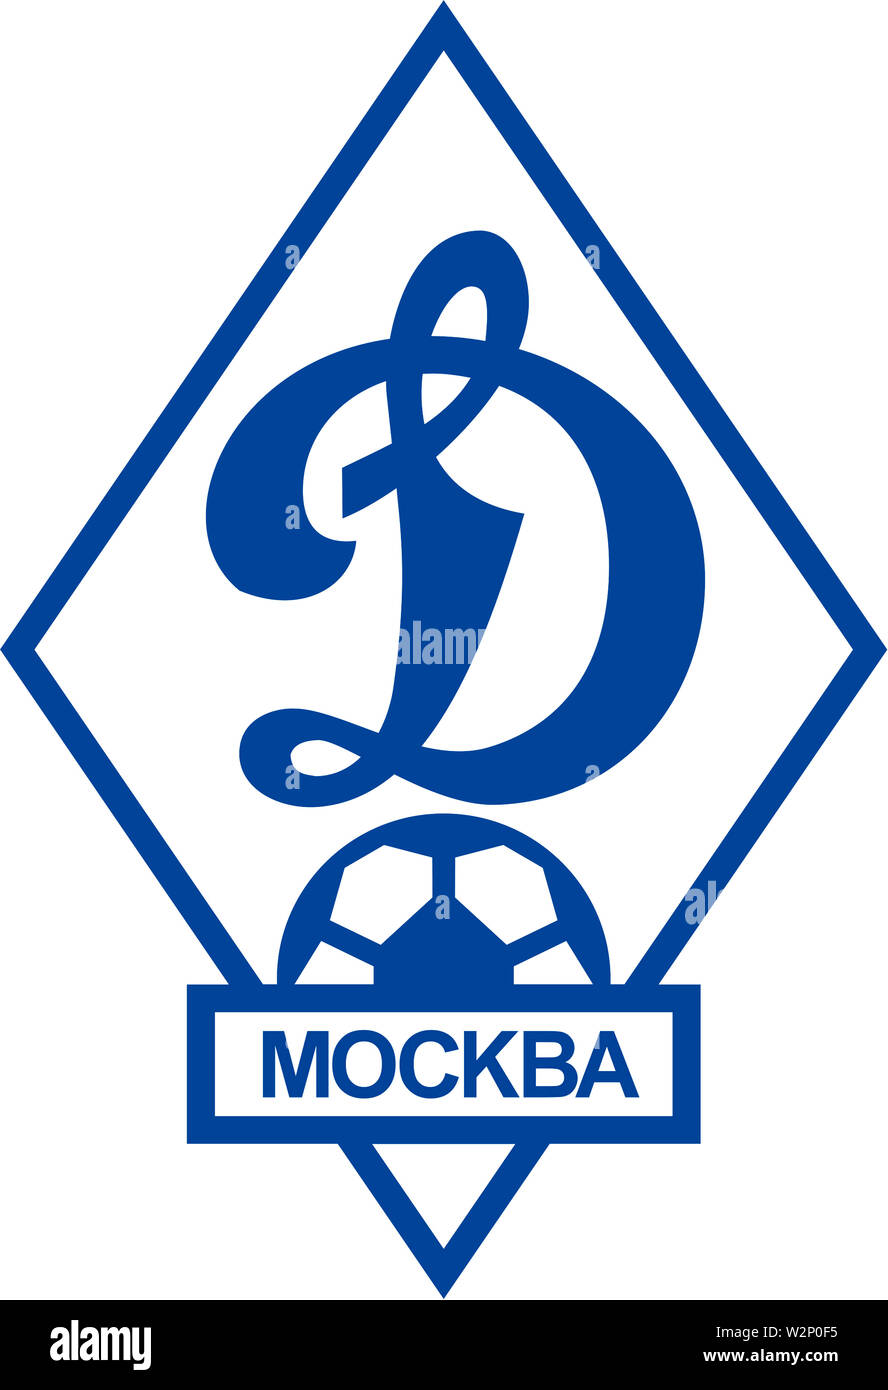 Logo de fédération de football club Dynamo Moscou - Russie. Banque D'Images